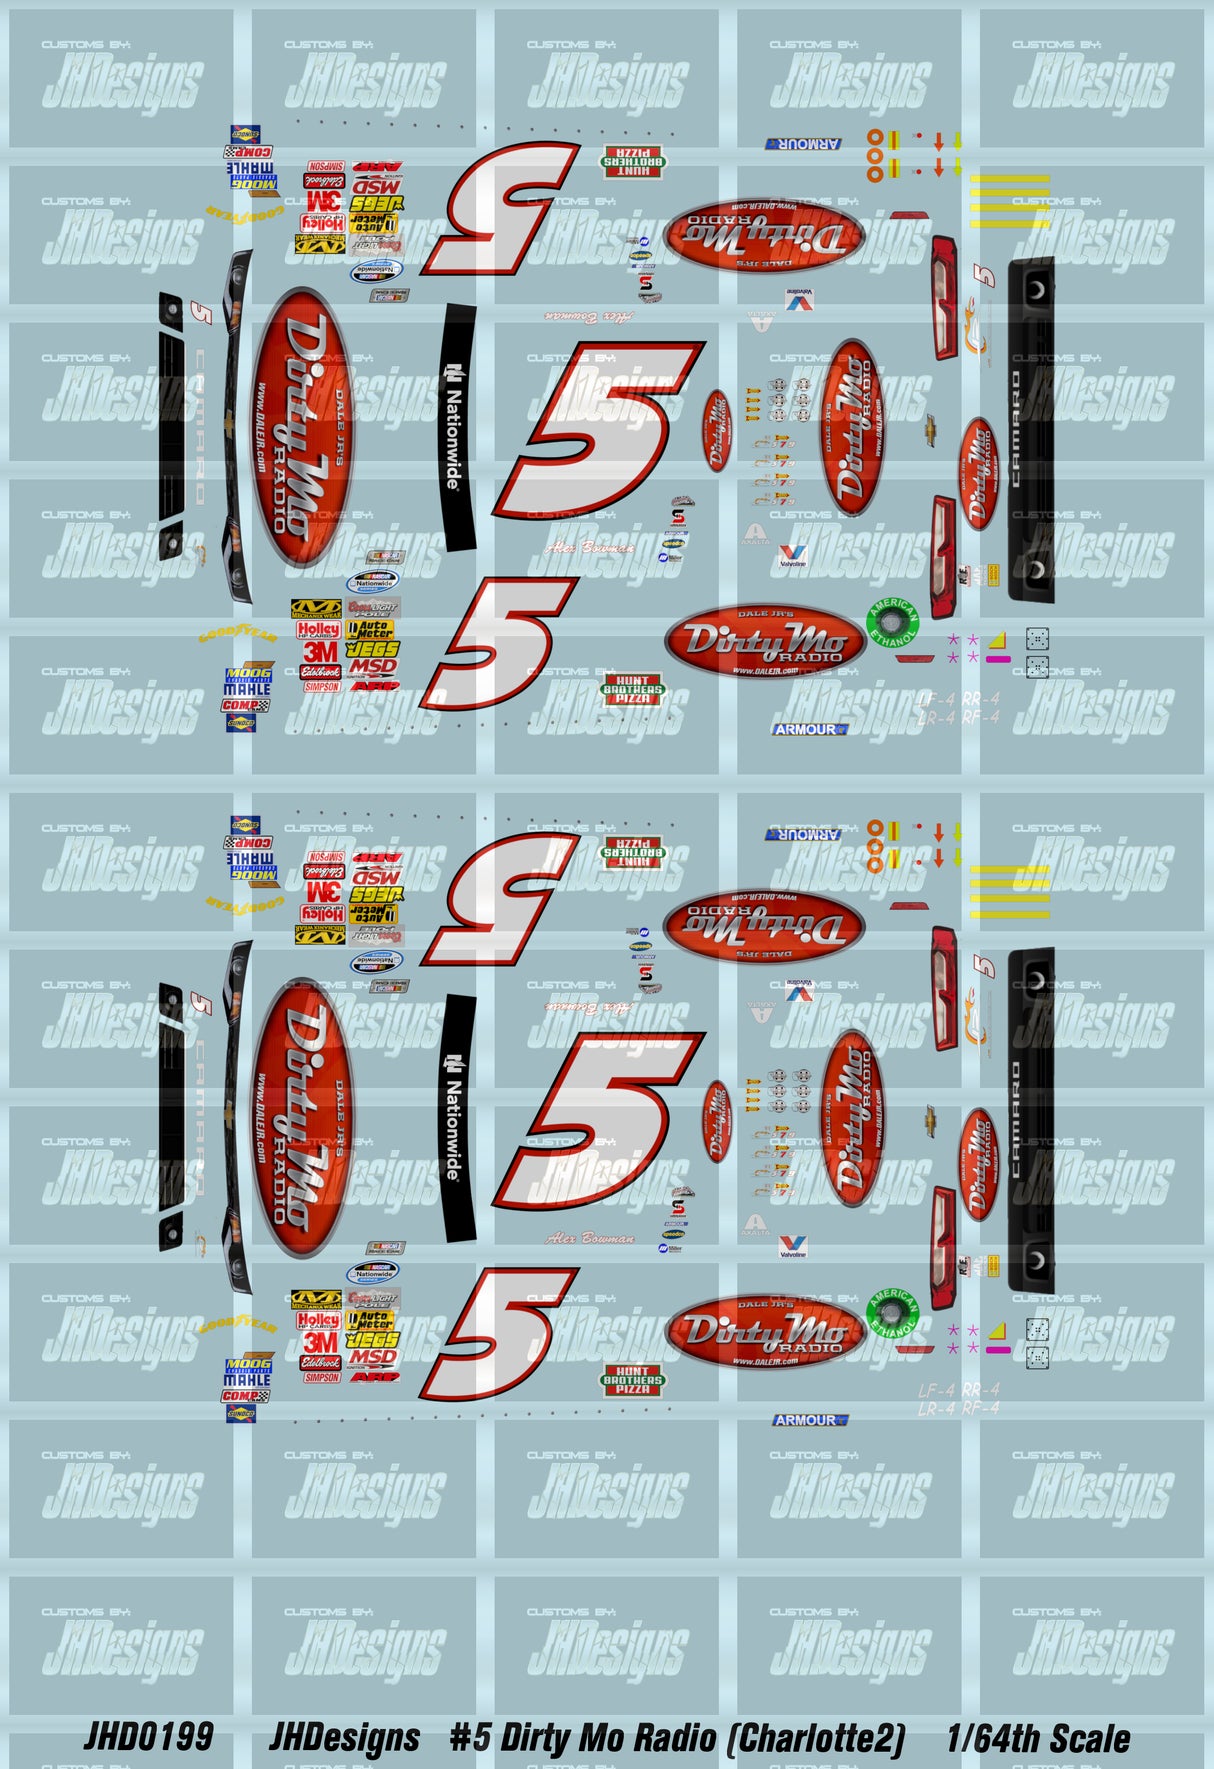 JH Designs Alex Bowman 2014 NWS #5 Dale Jr's Dirty Mo Radio (Charlotte Race) 1:64 Racecar Decal Set